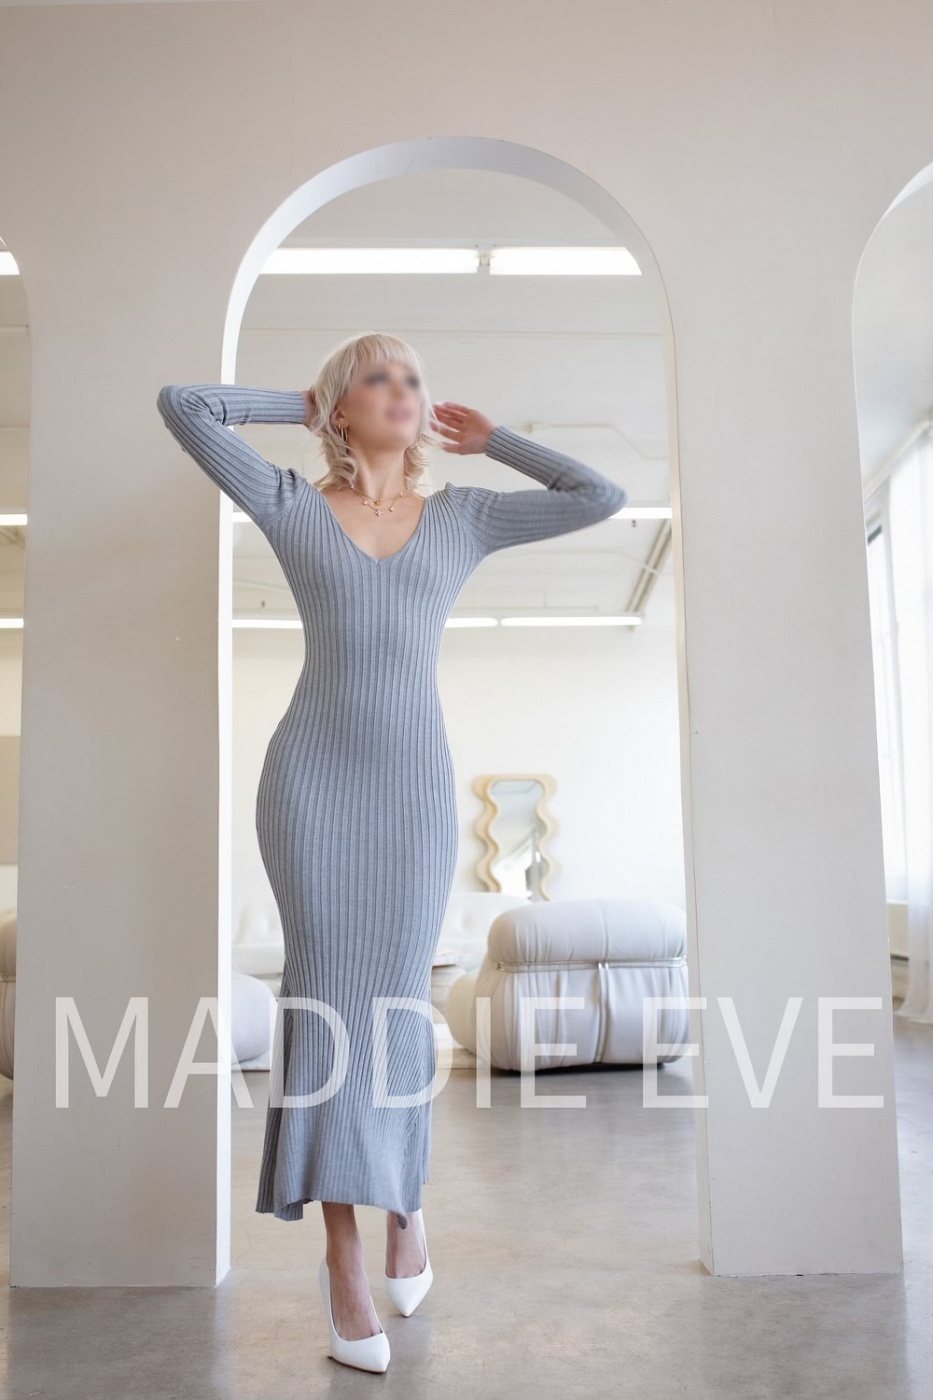 Maddie Eve